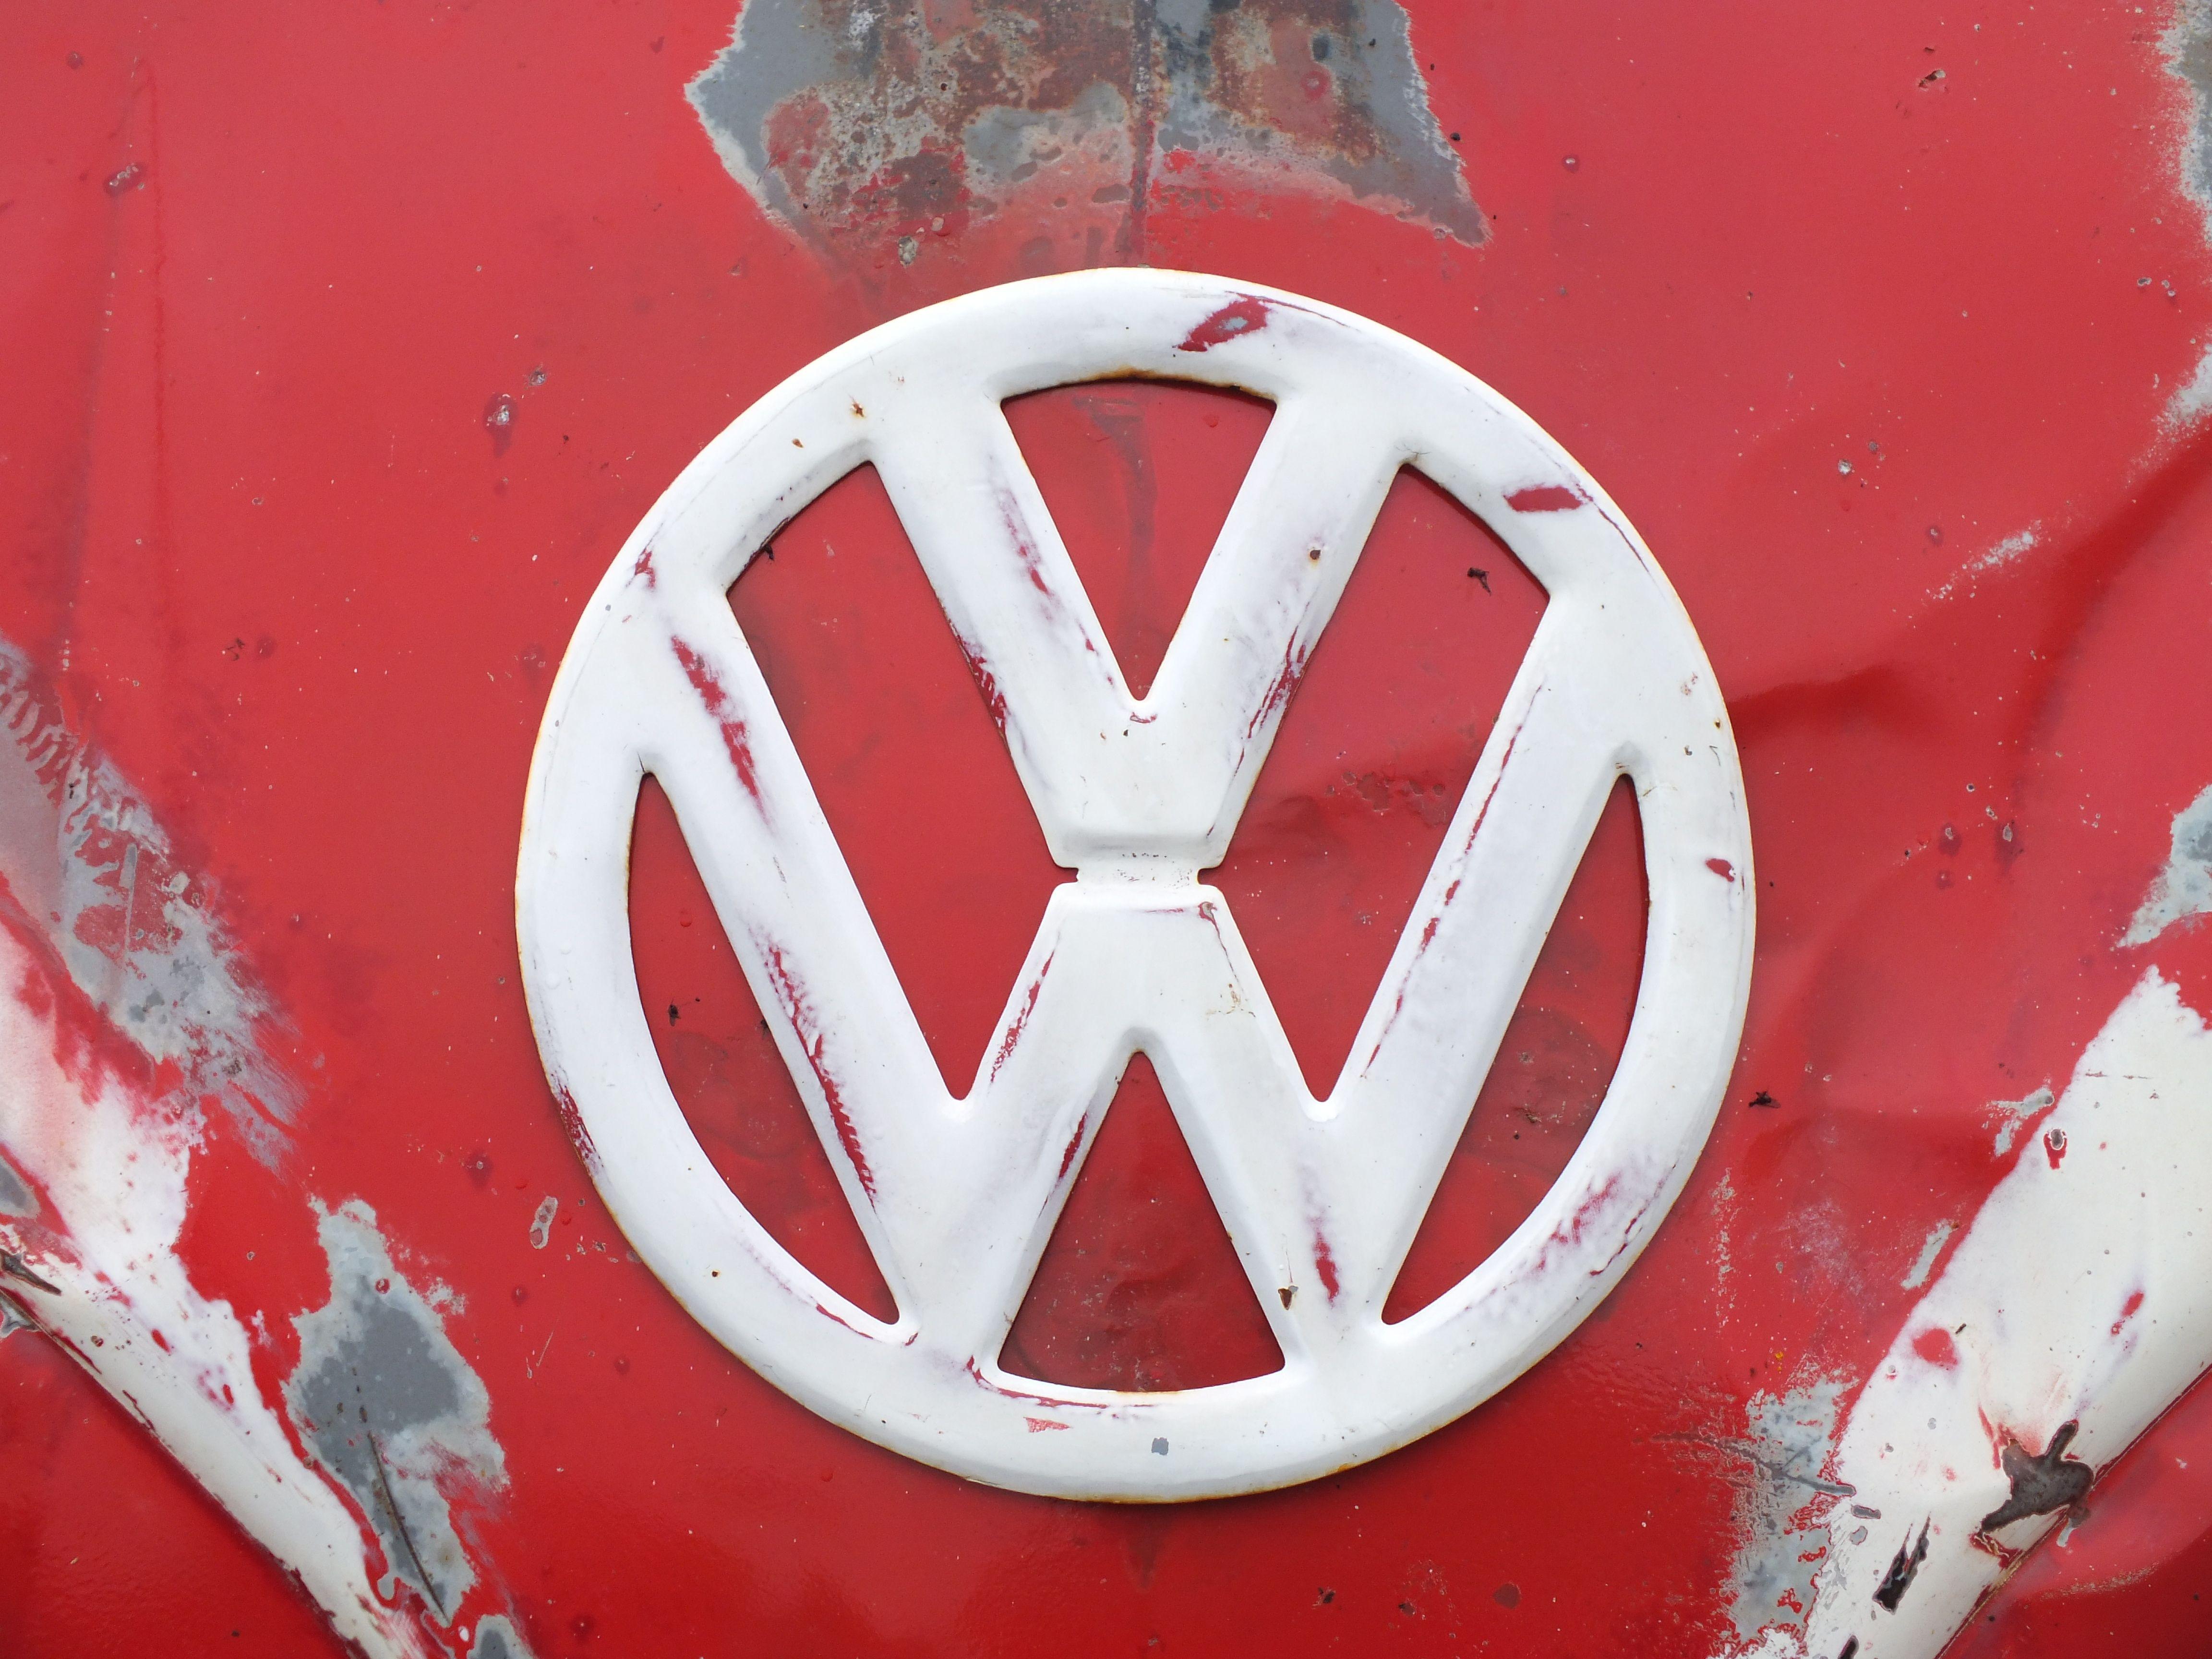 Smoking VW Logo - Polish pollution akin to smoking 000 cigarettes a year